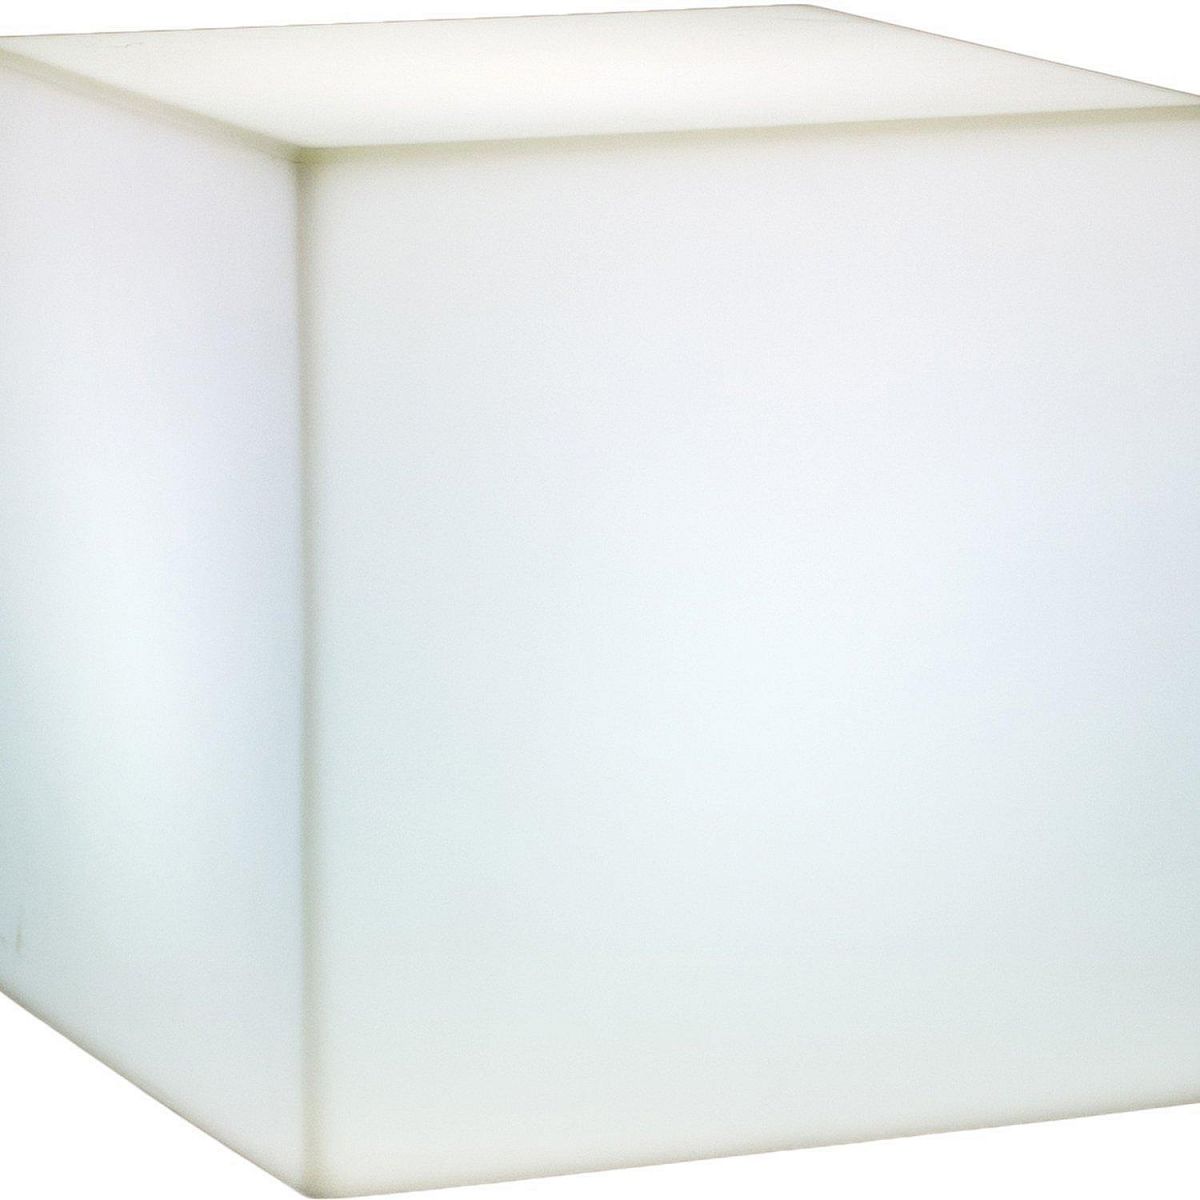 LUMENIO LED Cube Lighted Object